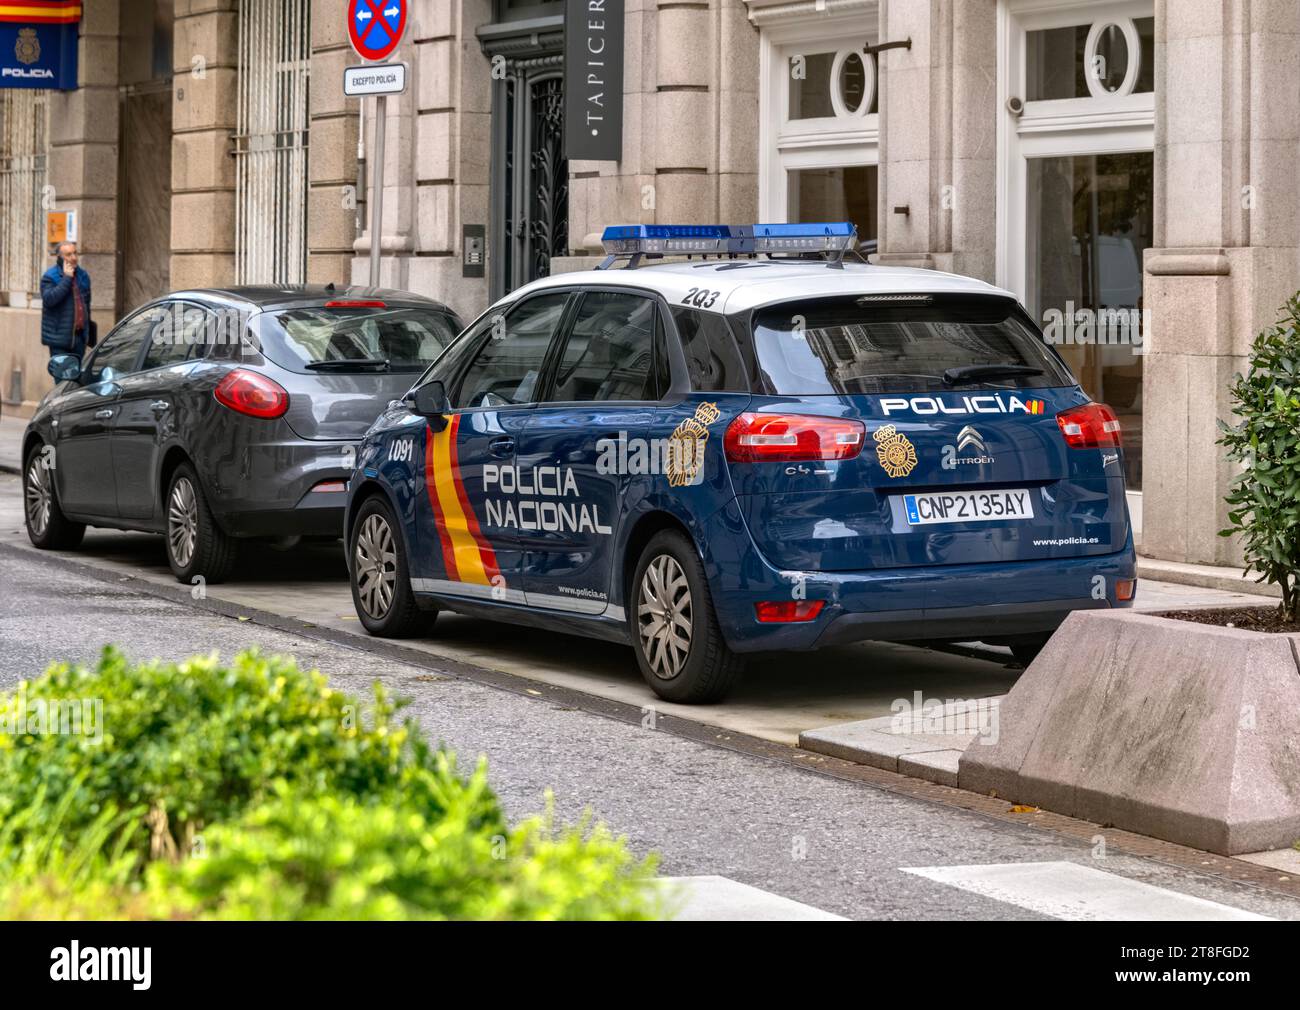 Vigo, Spain, Citroen Police car parked on pavement Policia car, Policia Nacional Stock Photo